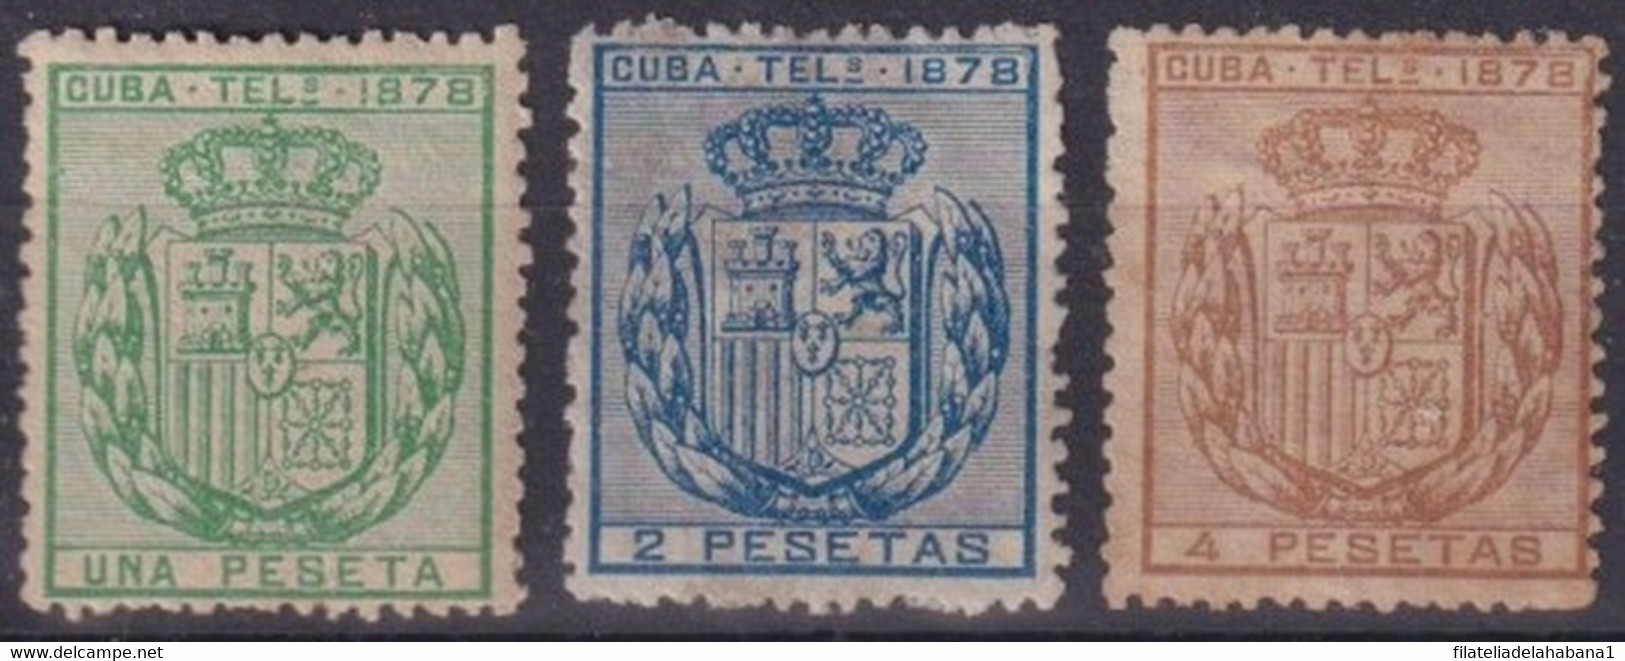 1878-197 CUBA SPAIN ESPAÑA 1878 COMPLETE SET TELEGRAPH TELEGRAFOS UNUSED NO GUM. - Telegraph